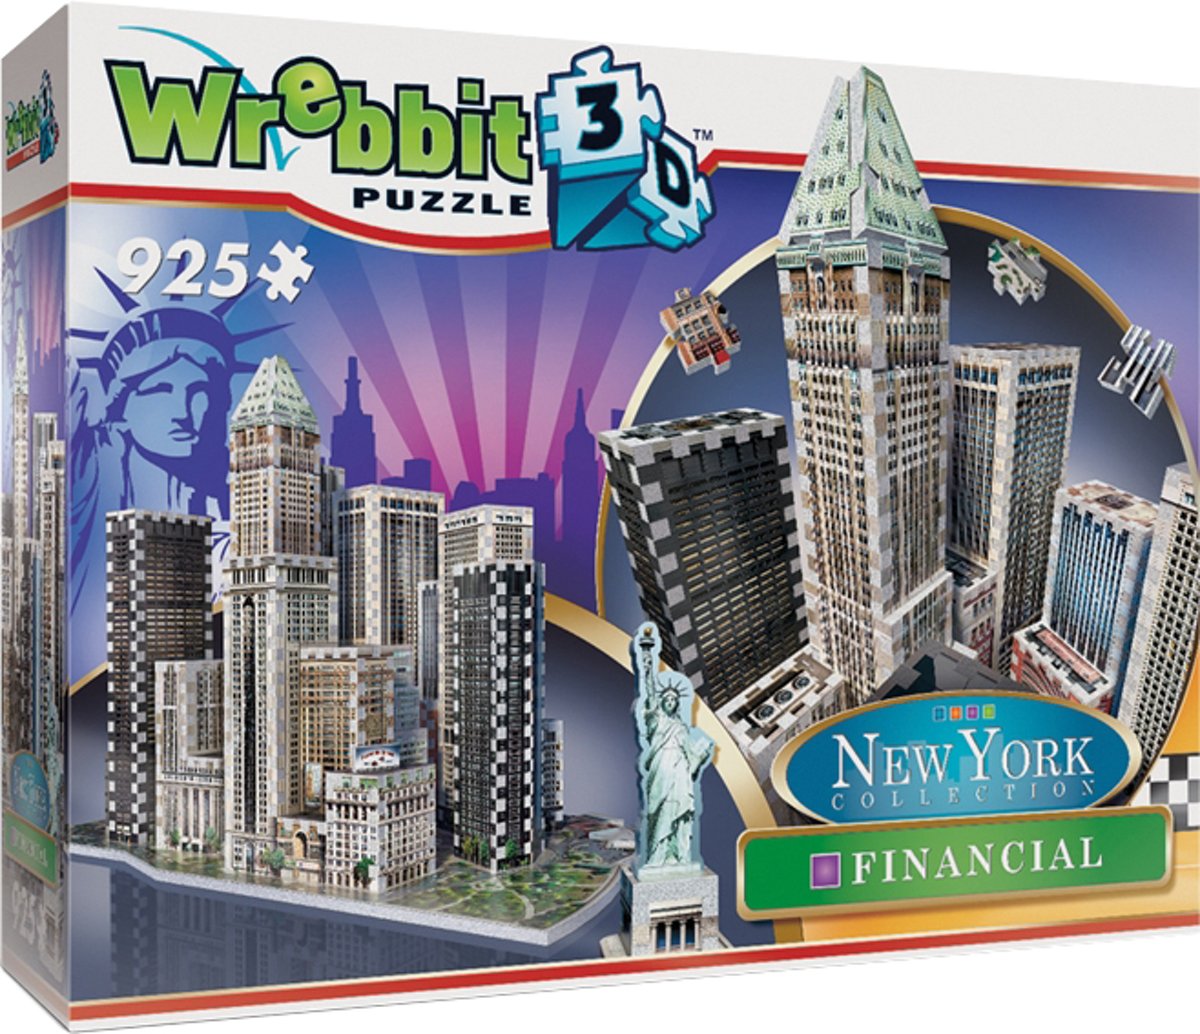 Wrebbit 3D Puzzle - New York Financial 925 stukjes